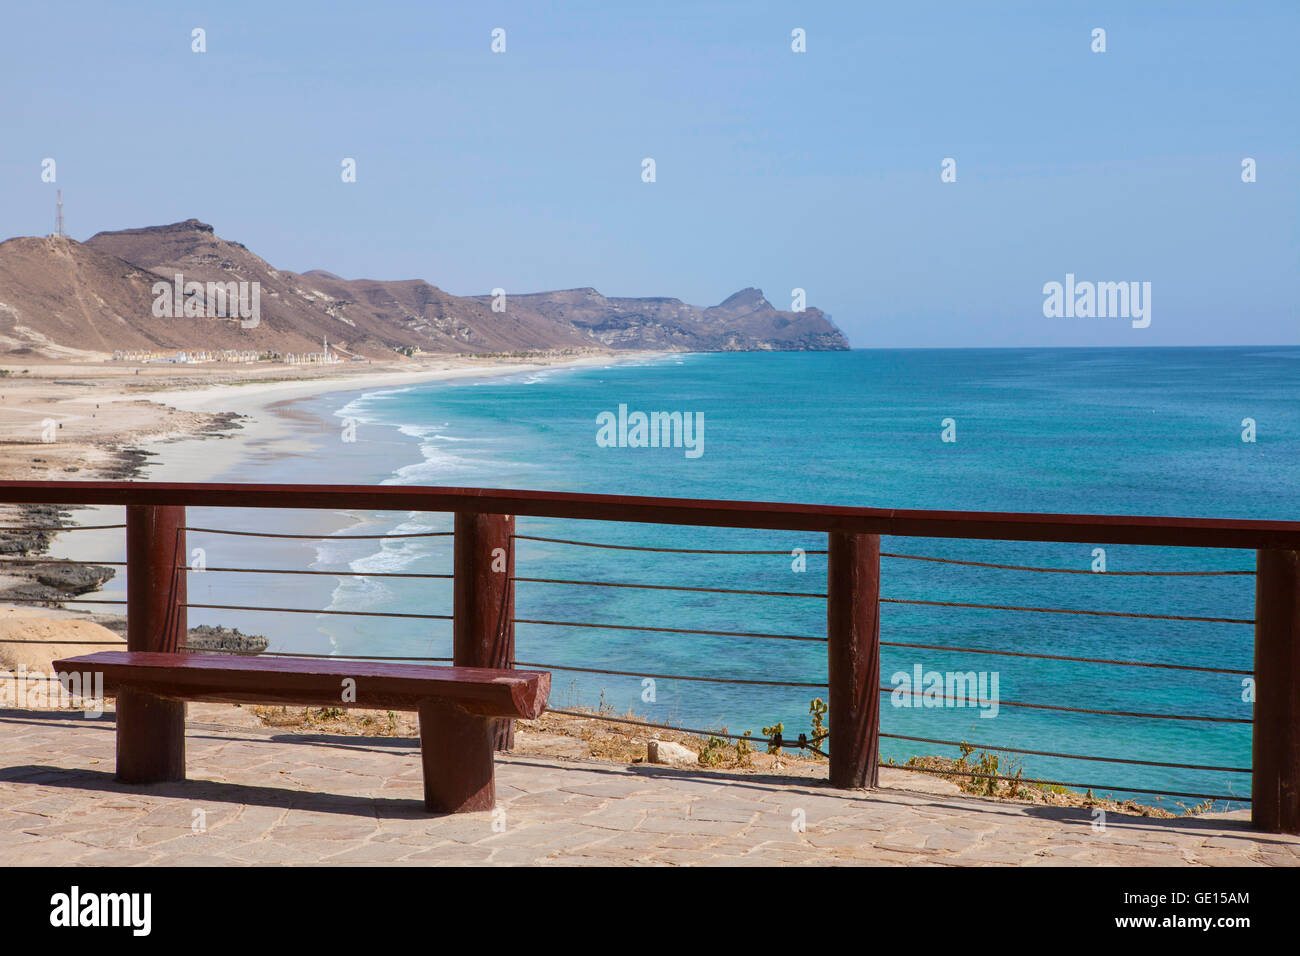 Al Mughsayl - popular tourist destinations in Dhofar, Oman. Stock Photo